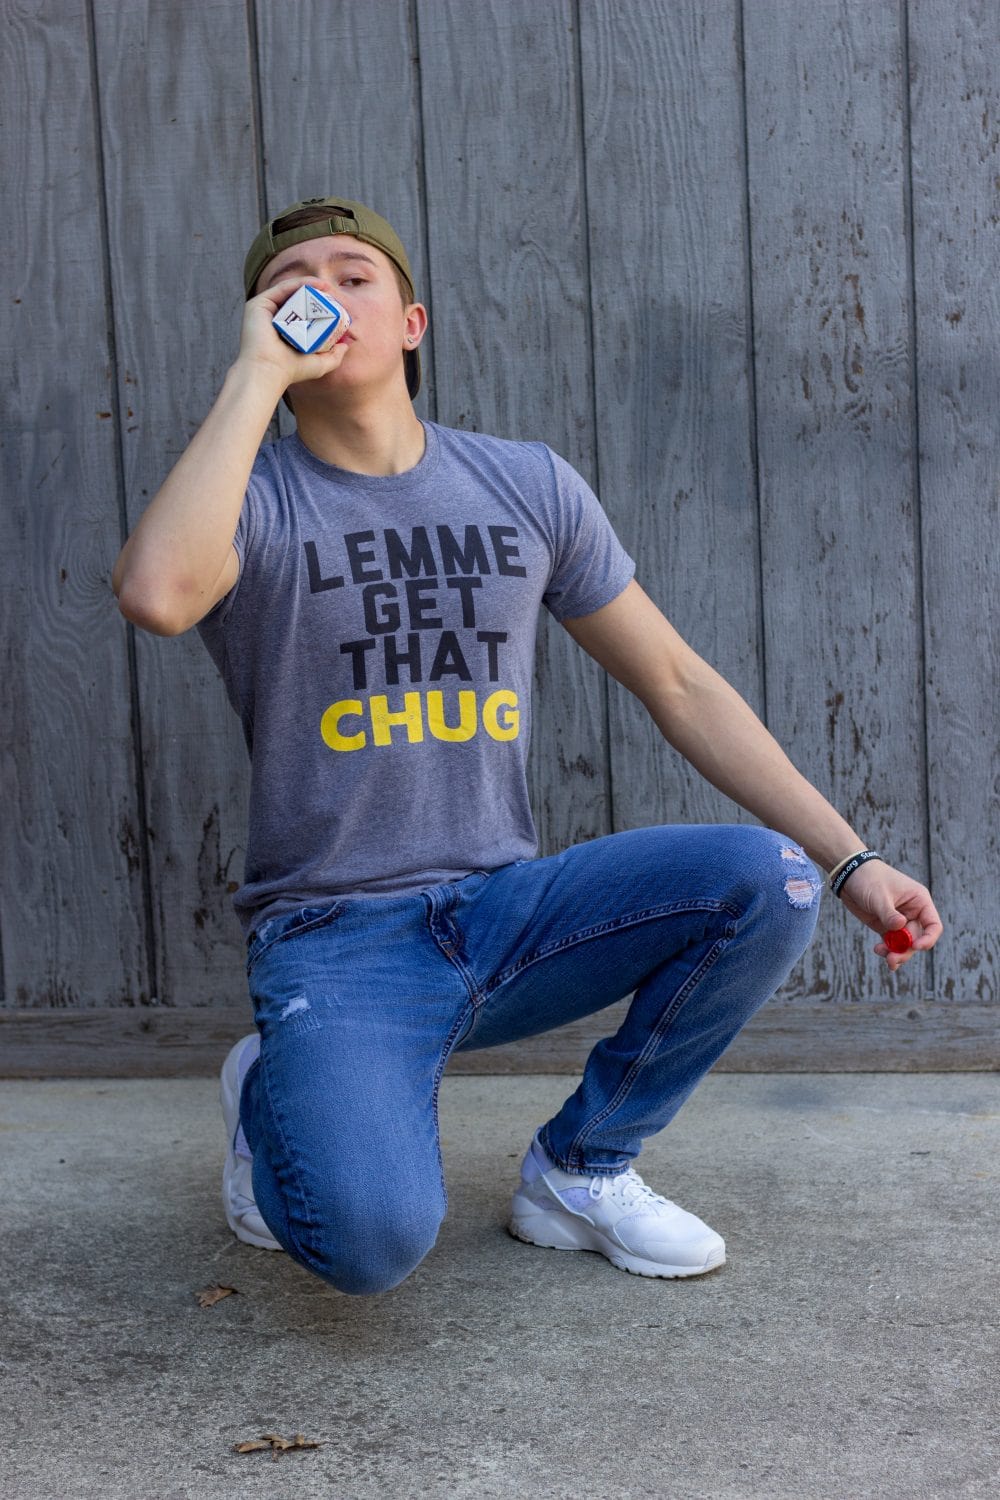 Teen boy in a shirt that says "Lemme get that chug."